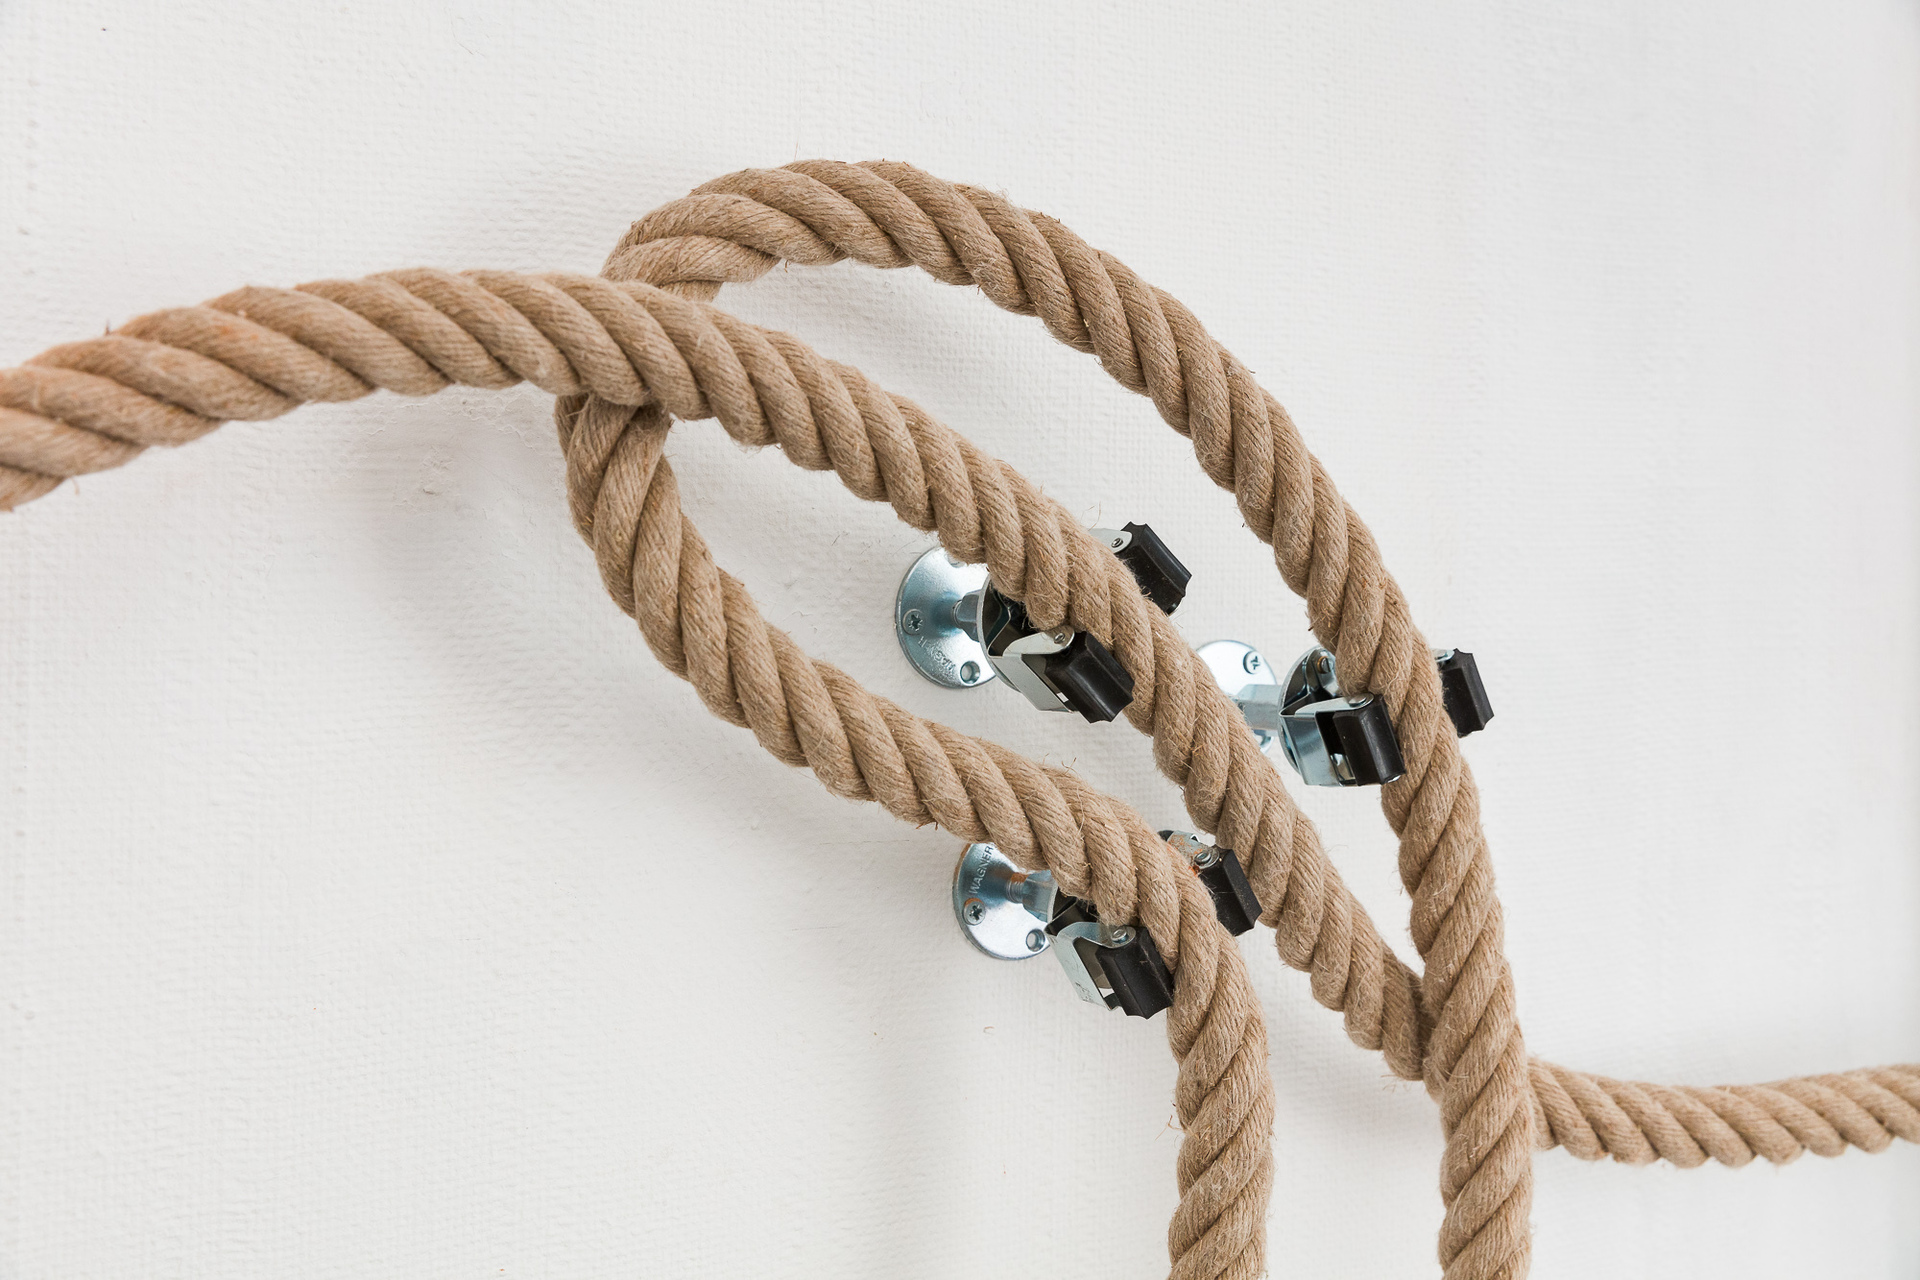 10Schirin Charlot, Round Dance, 2020, Hemp rope & device holder, 185 x 53 cm